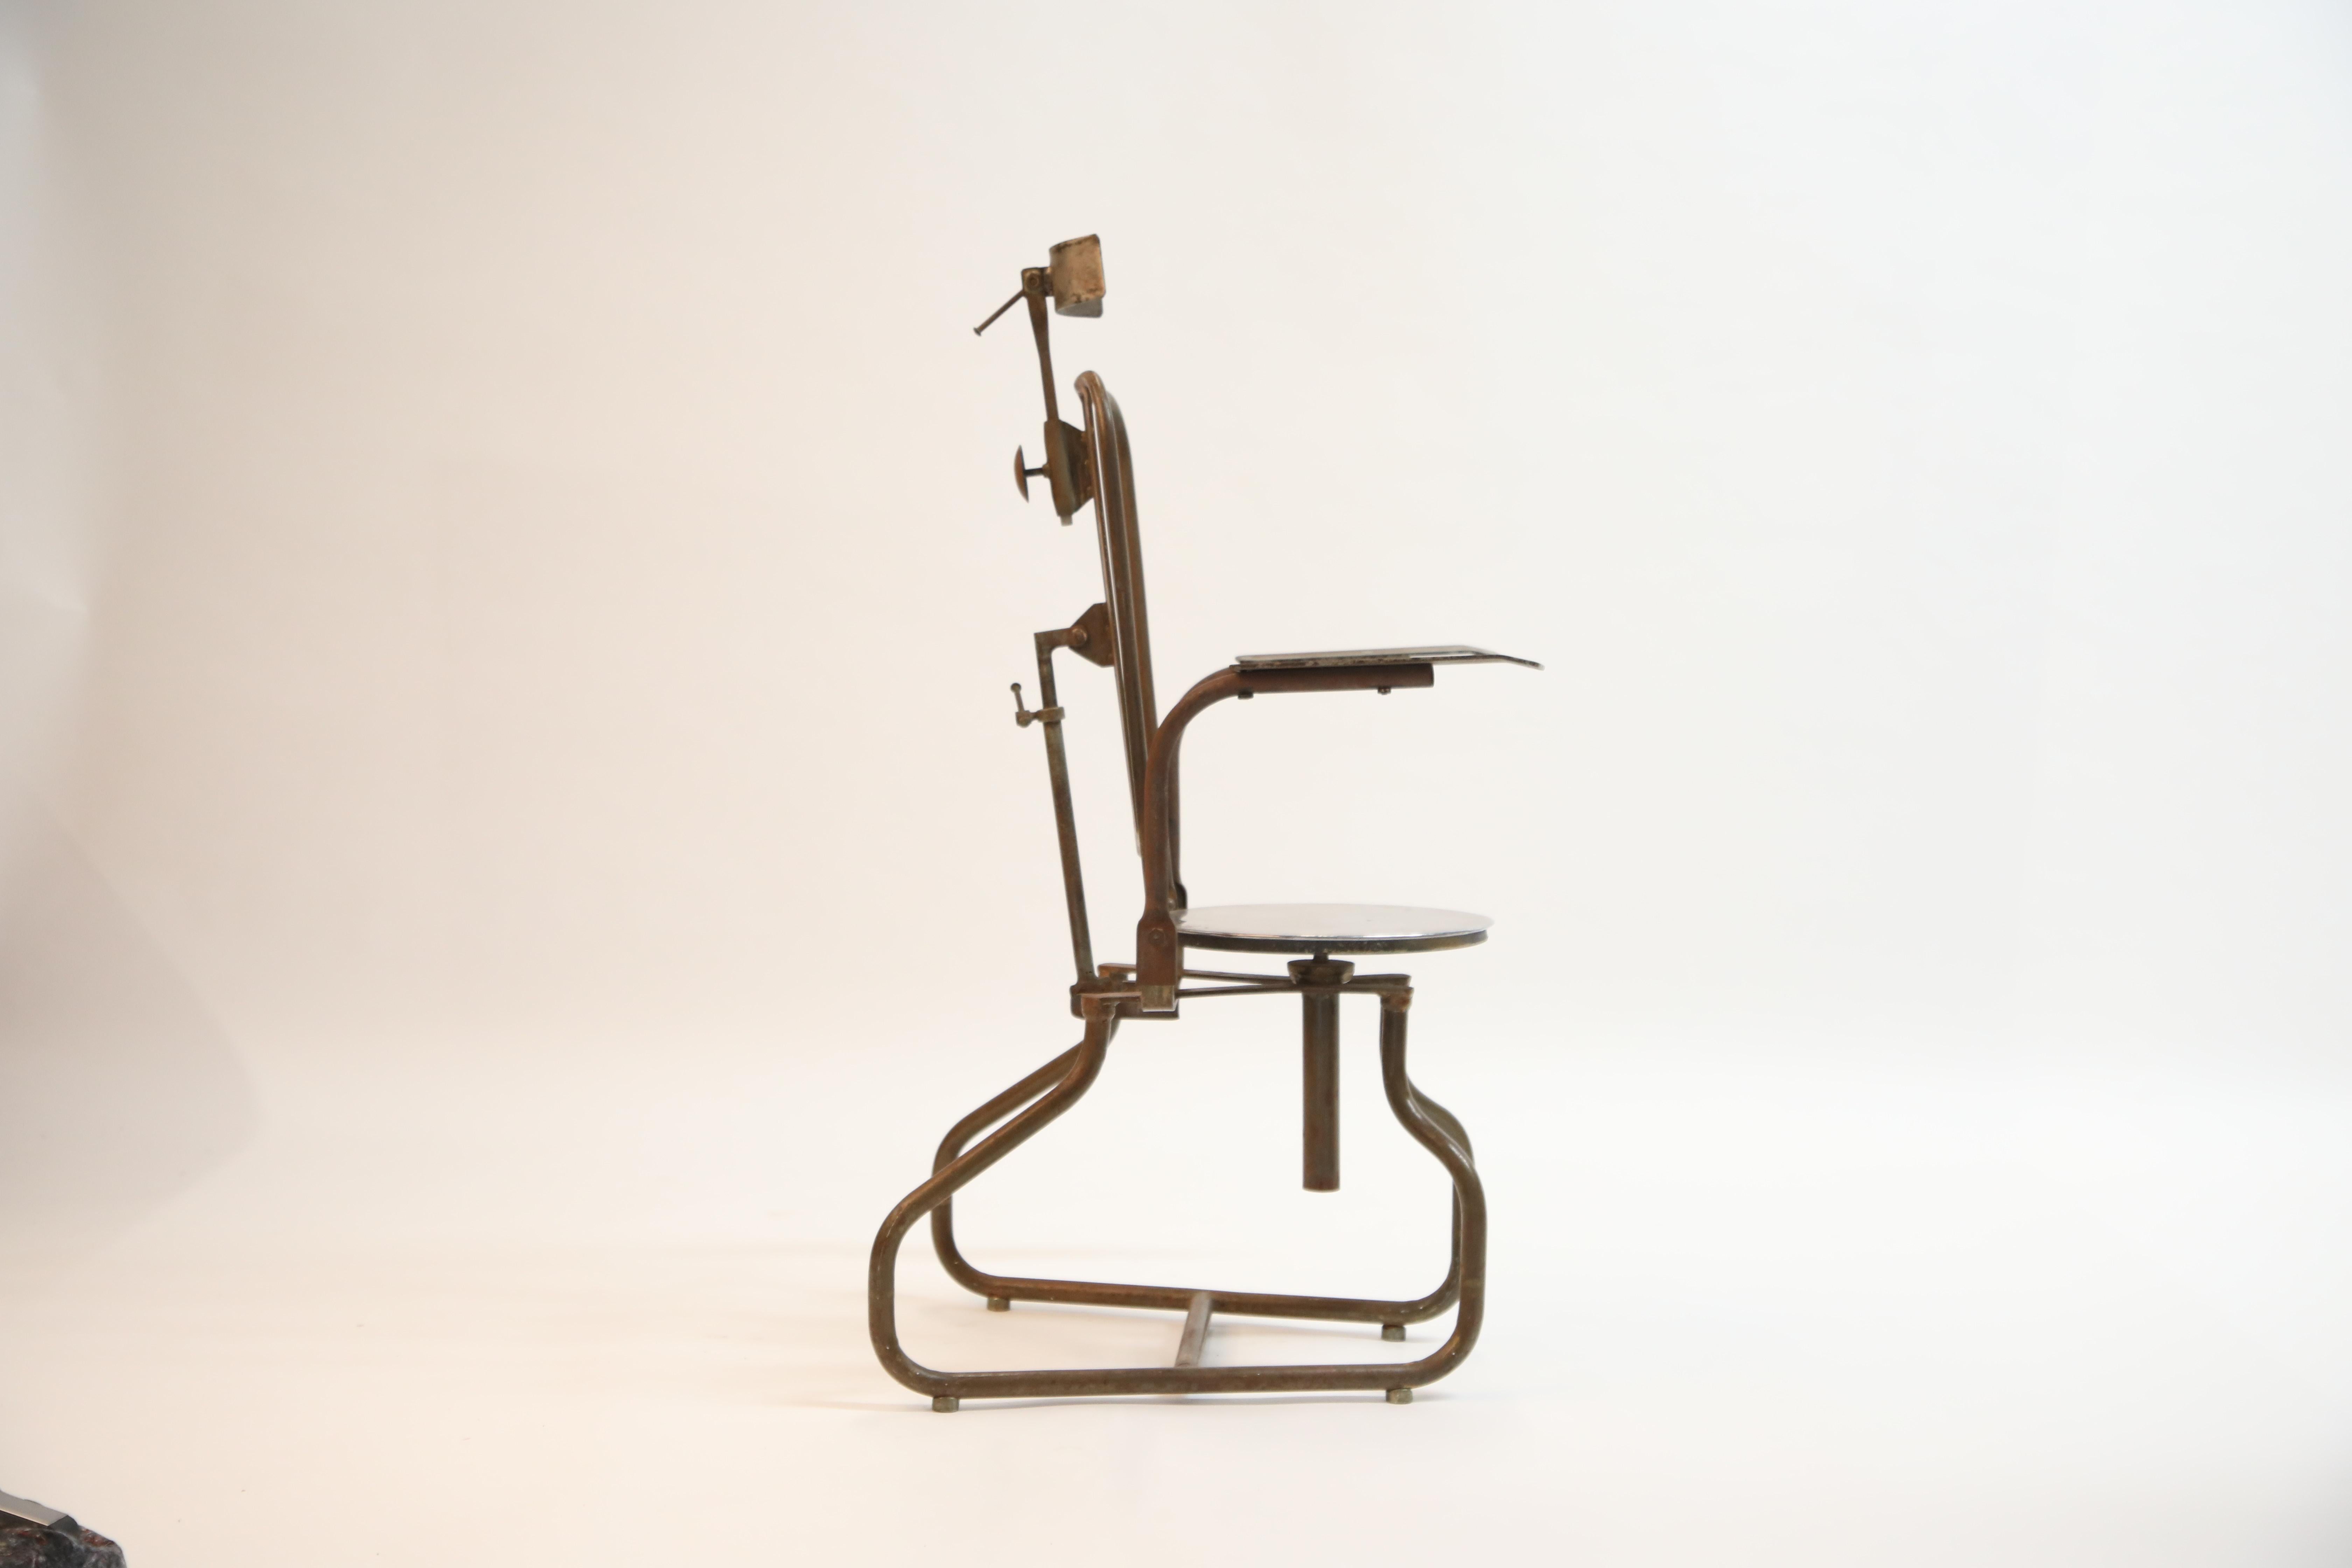 Industrial Steel Dentist Chair or Sculpture from Brazil, circa 1900s (Brasilianisch)